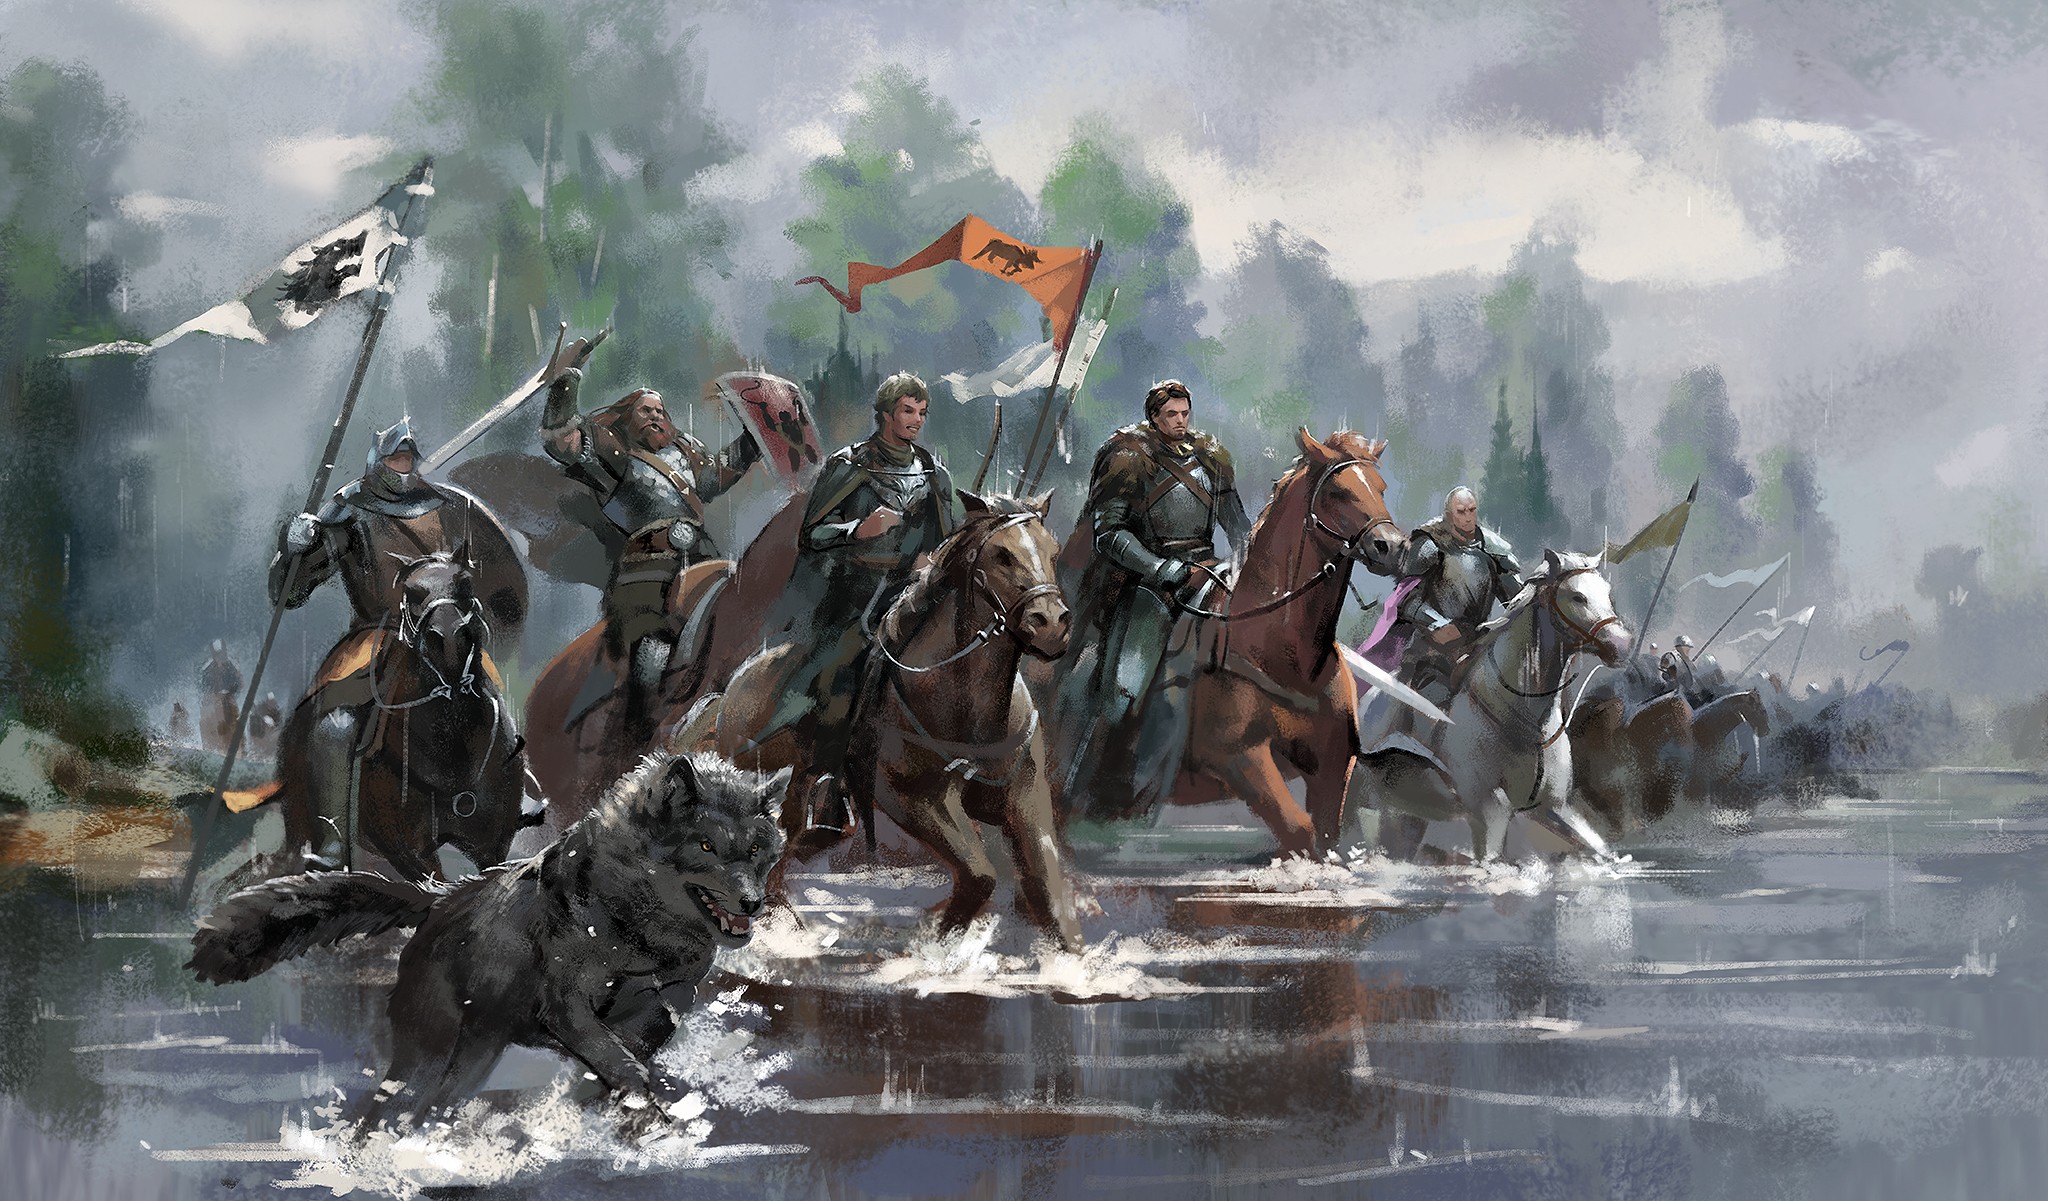 General 2048x1201 artwork fantasy art Game of Thrones TV series digital art horseback horse water flag shield armor sword wolf animals army men